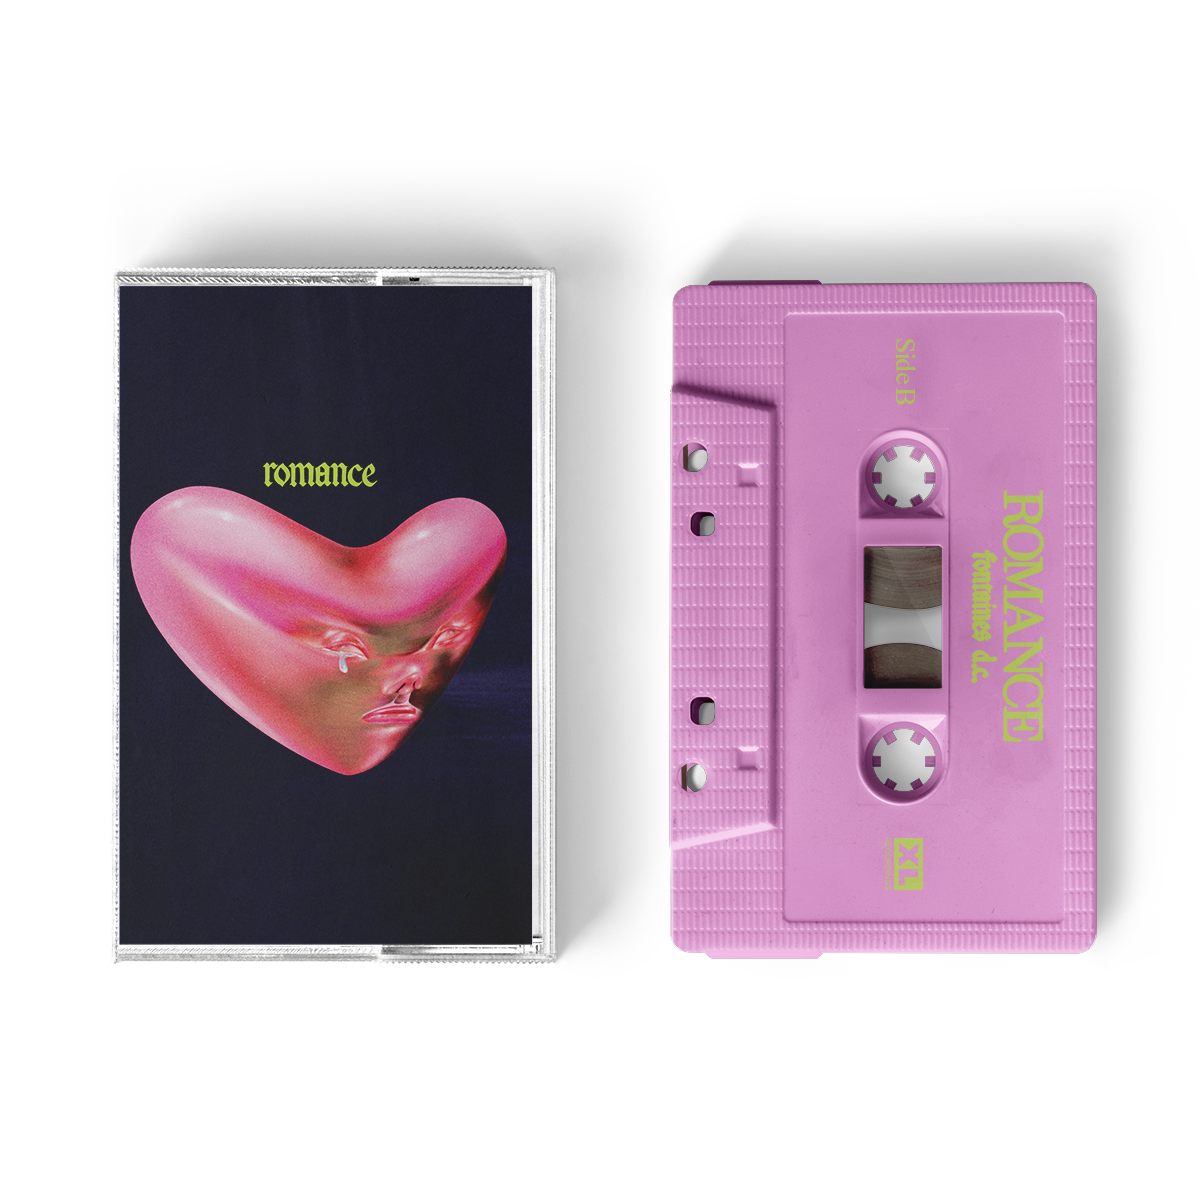 Romance Alternative Art Cassette Tape [PREORDER]